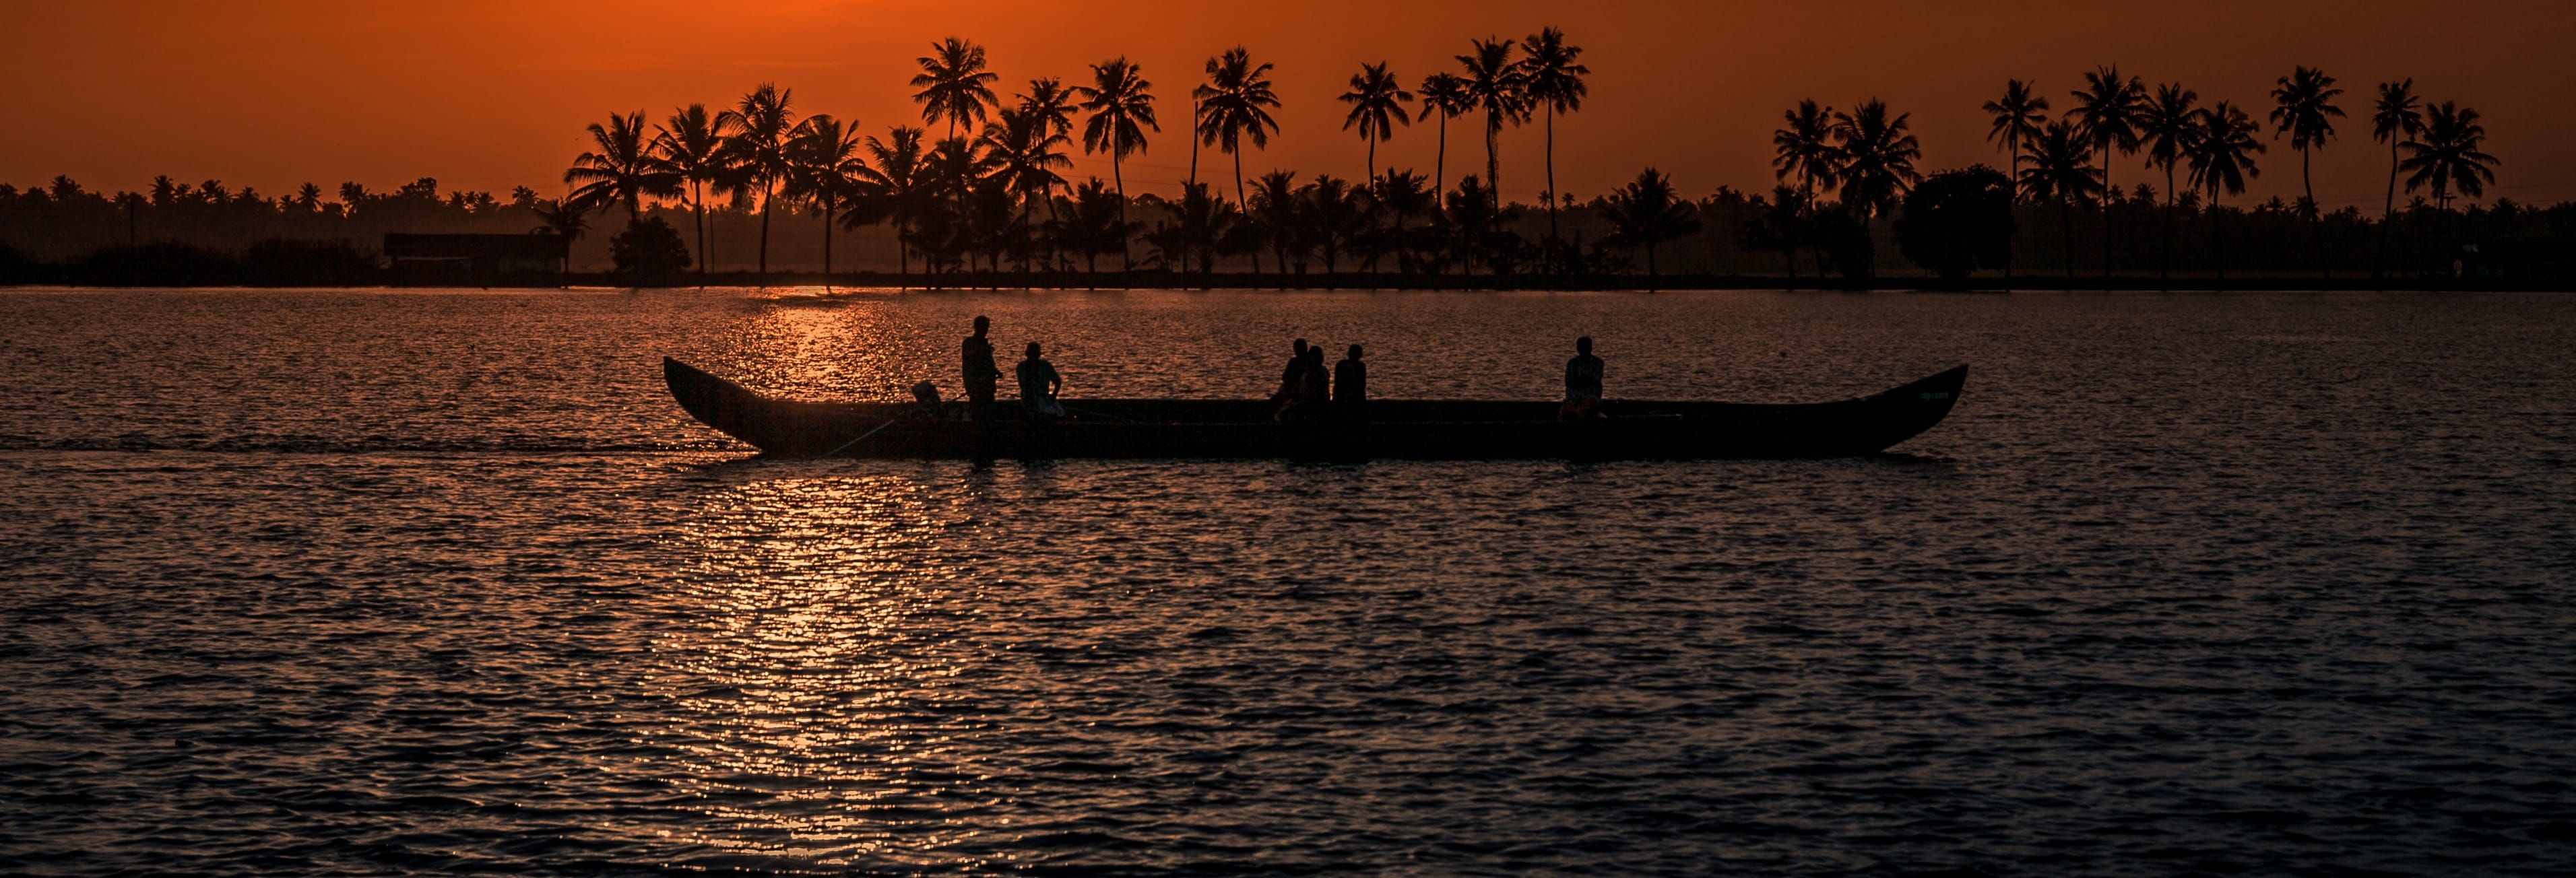 kerala-beach-sunset